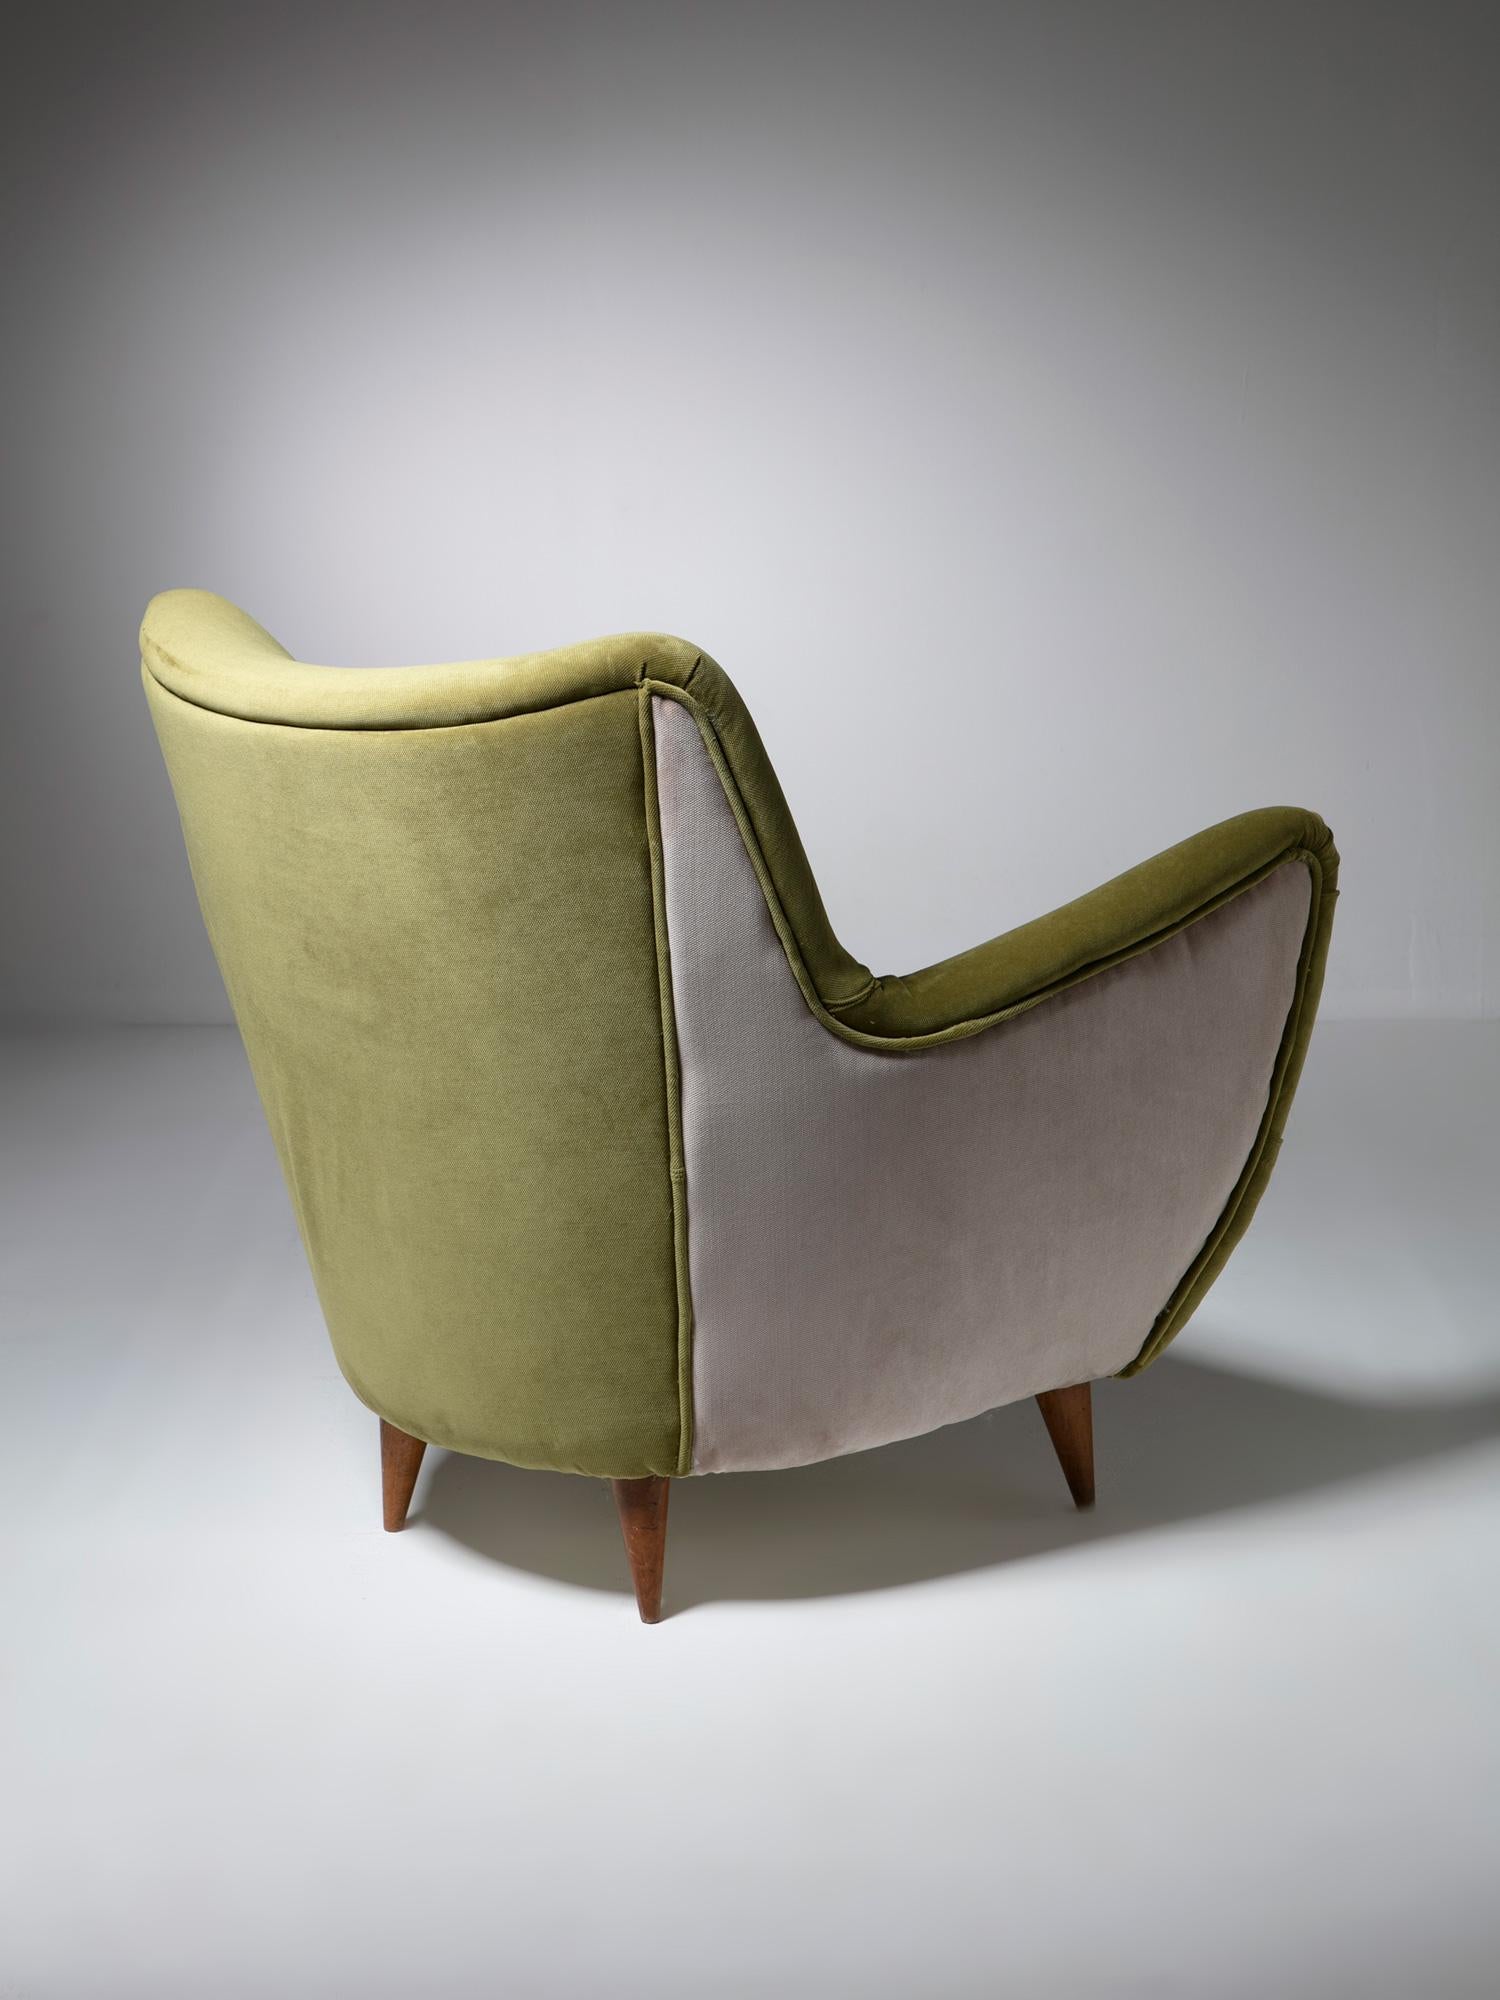 Cozy Perla armchair by Guglielmo Veronesi for Isa, Bergamo.
Green and white covering.
 